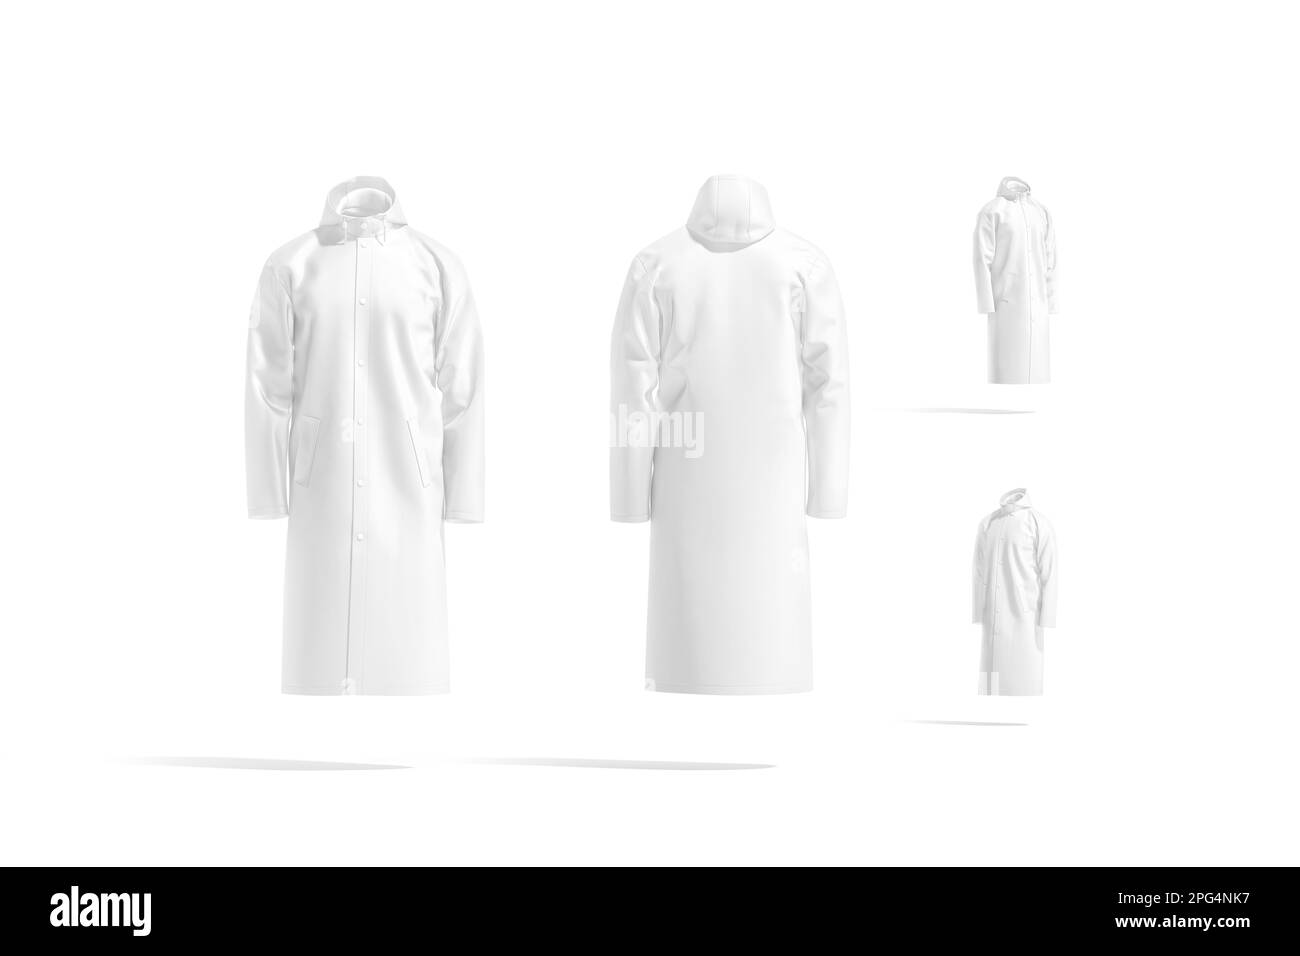 Blank white protective raincoat mockup, different views Stock Photo